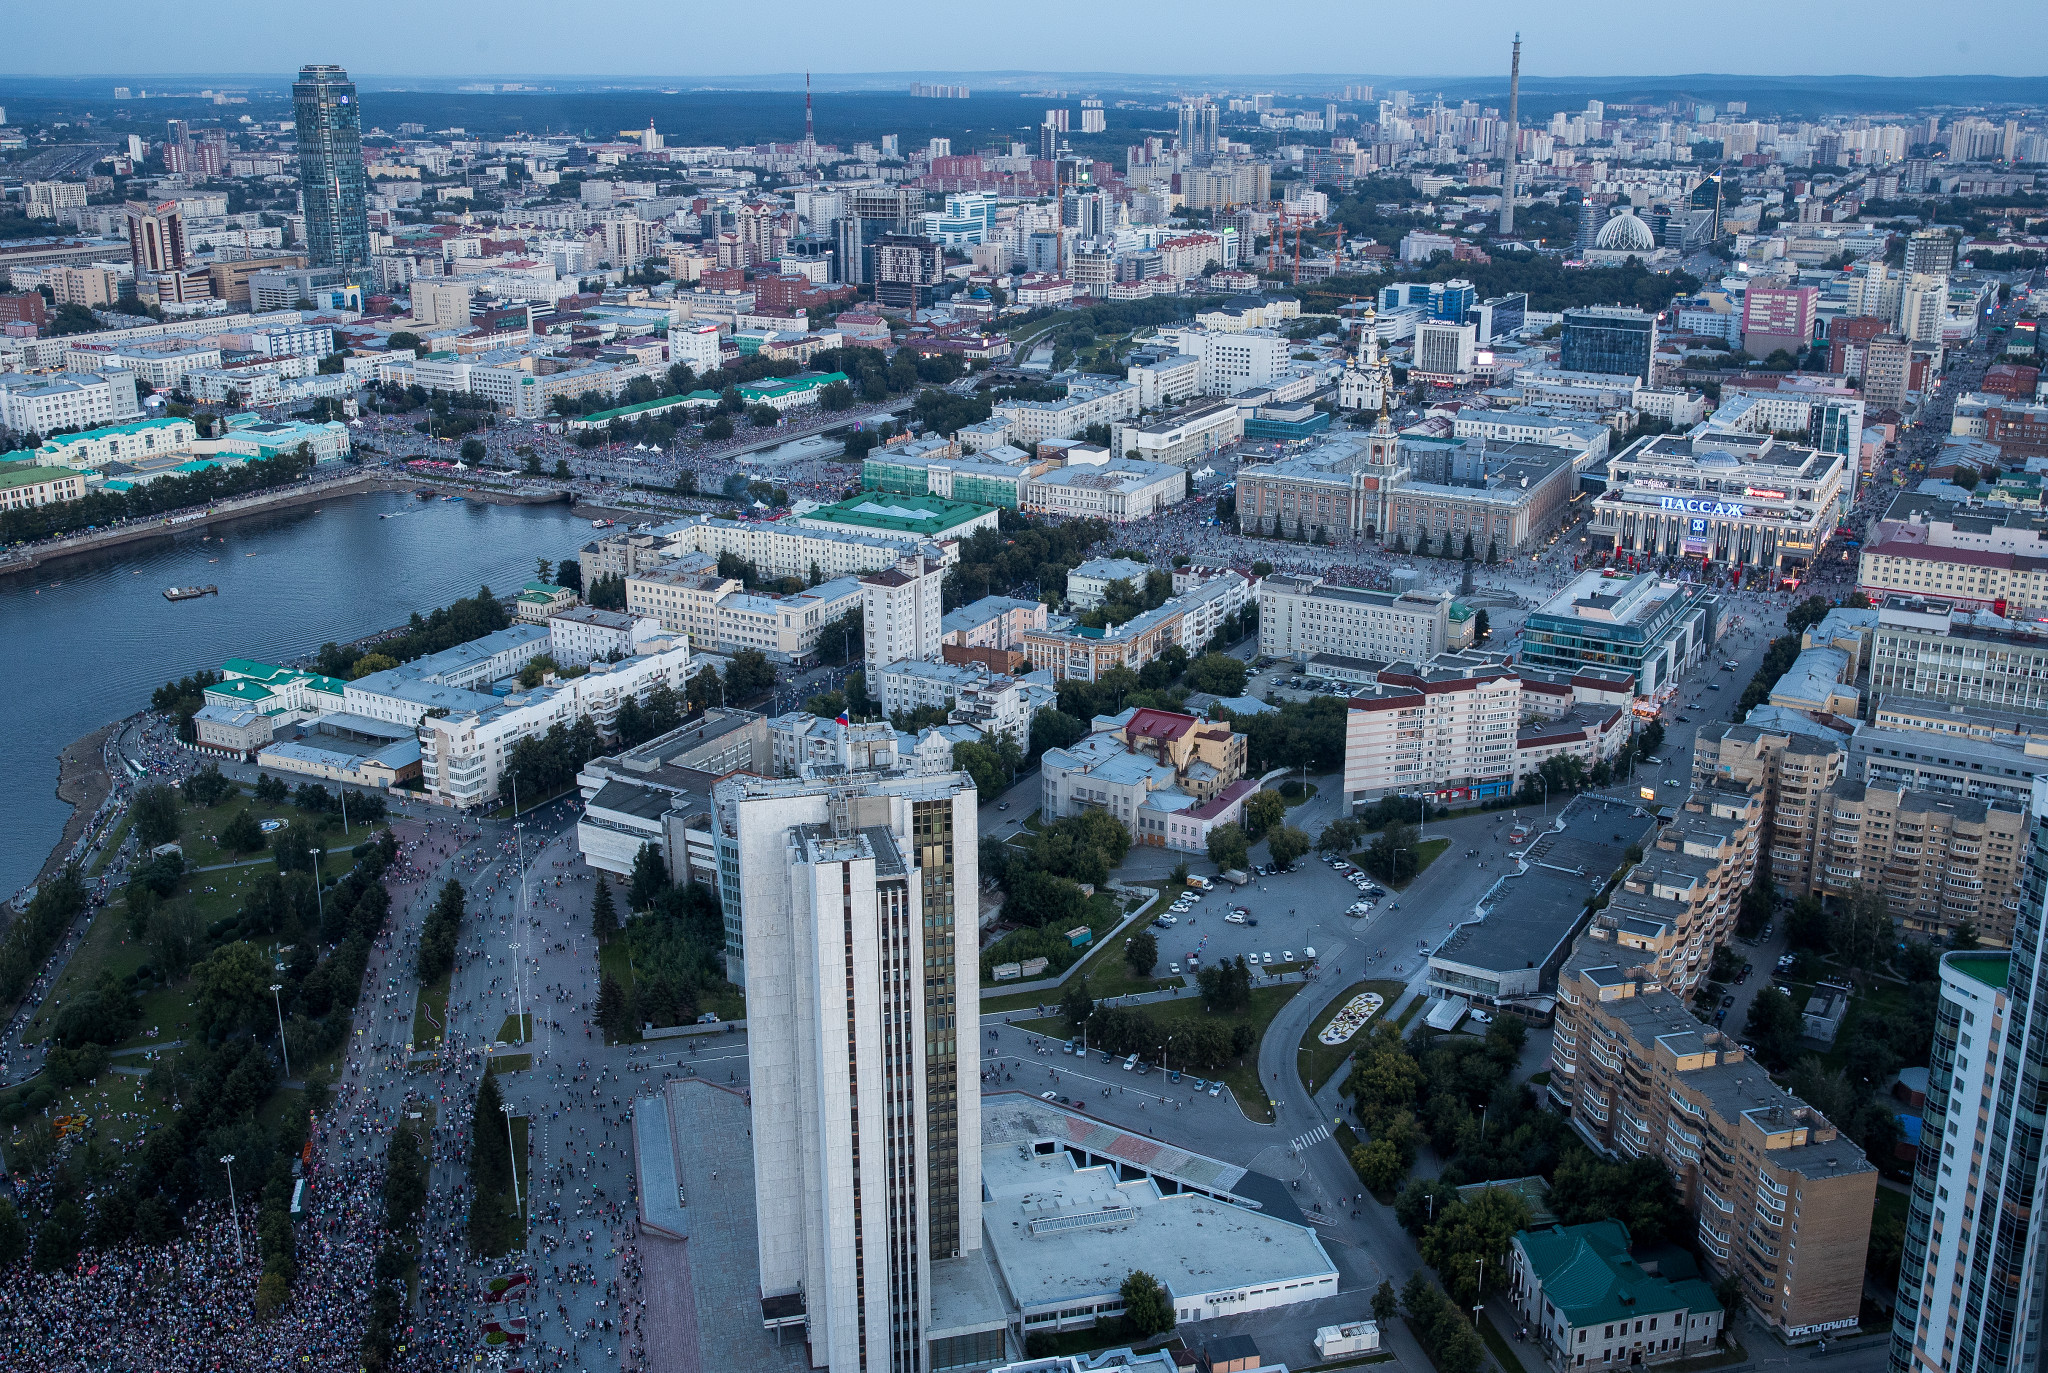 Yekaterinburg is scheduled to host the next FISU Summer World University Games in August 2023 ©Getty Images